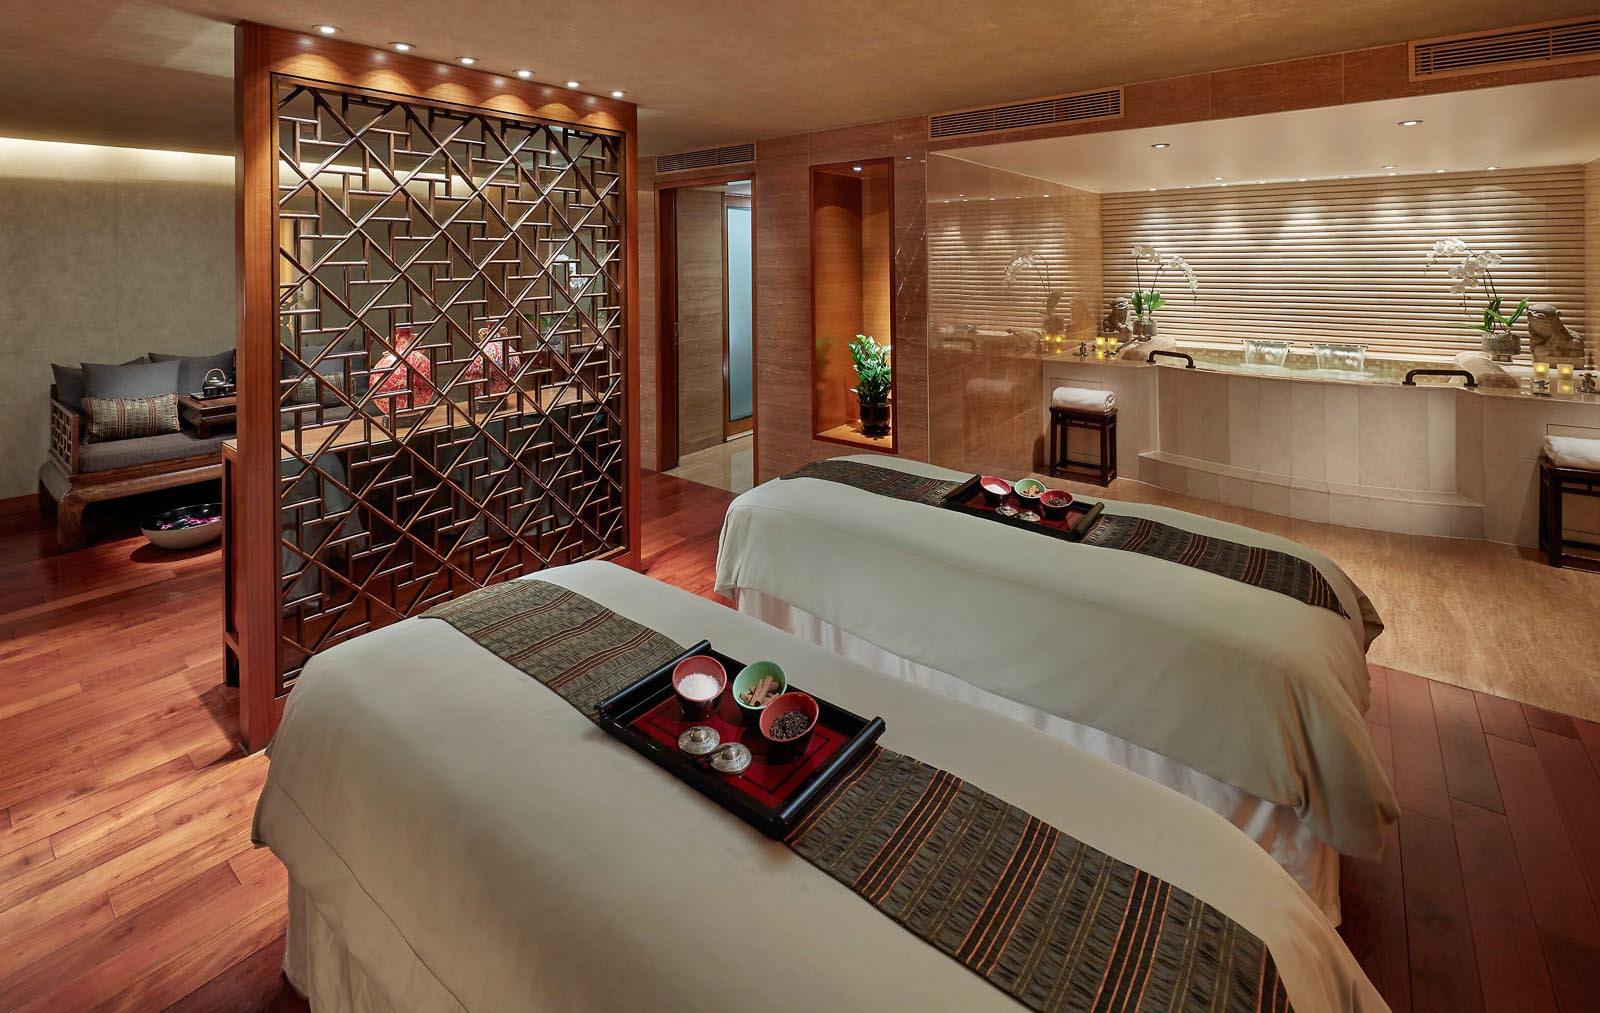 Suite room of the Mandarin Spa in Mandarin Oriental Hong Kong